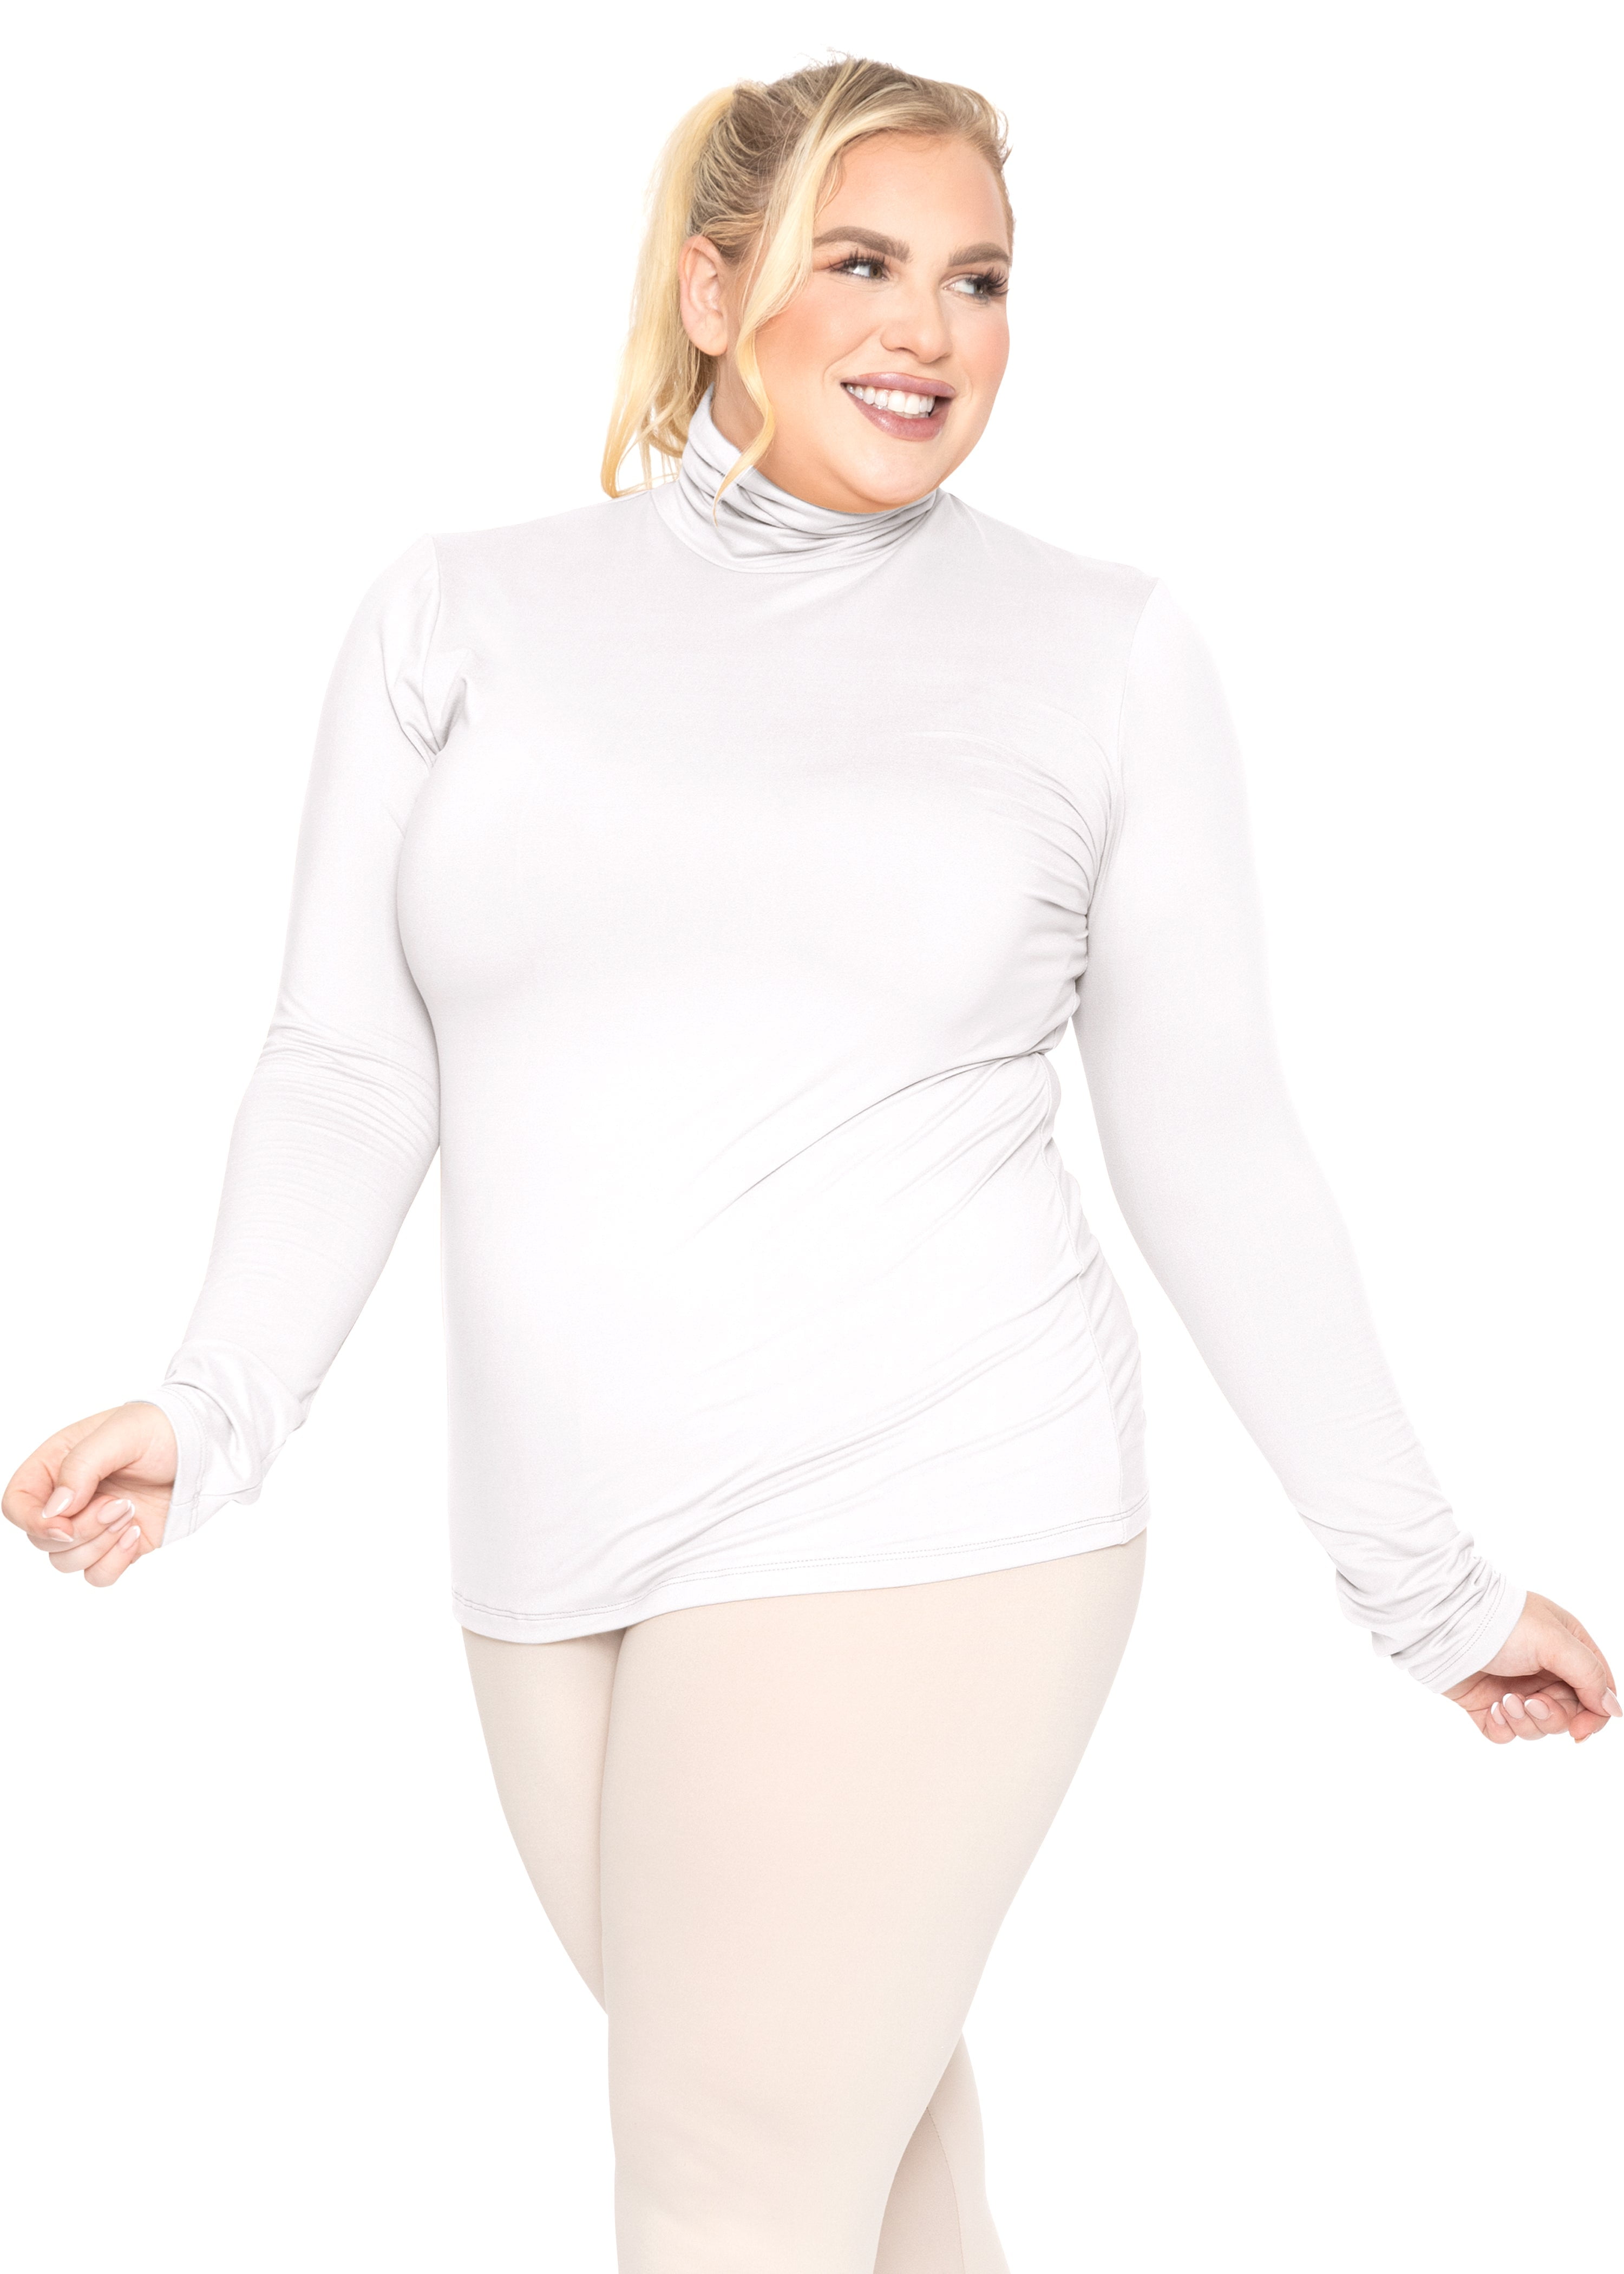 Women's Plus Size Warm Long Sleeve Turtleneck Top Adult XL to 5X Ultra Soft 